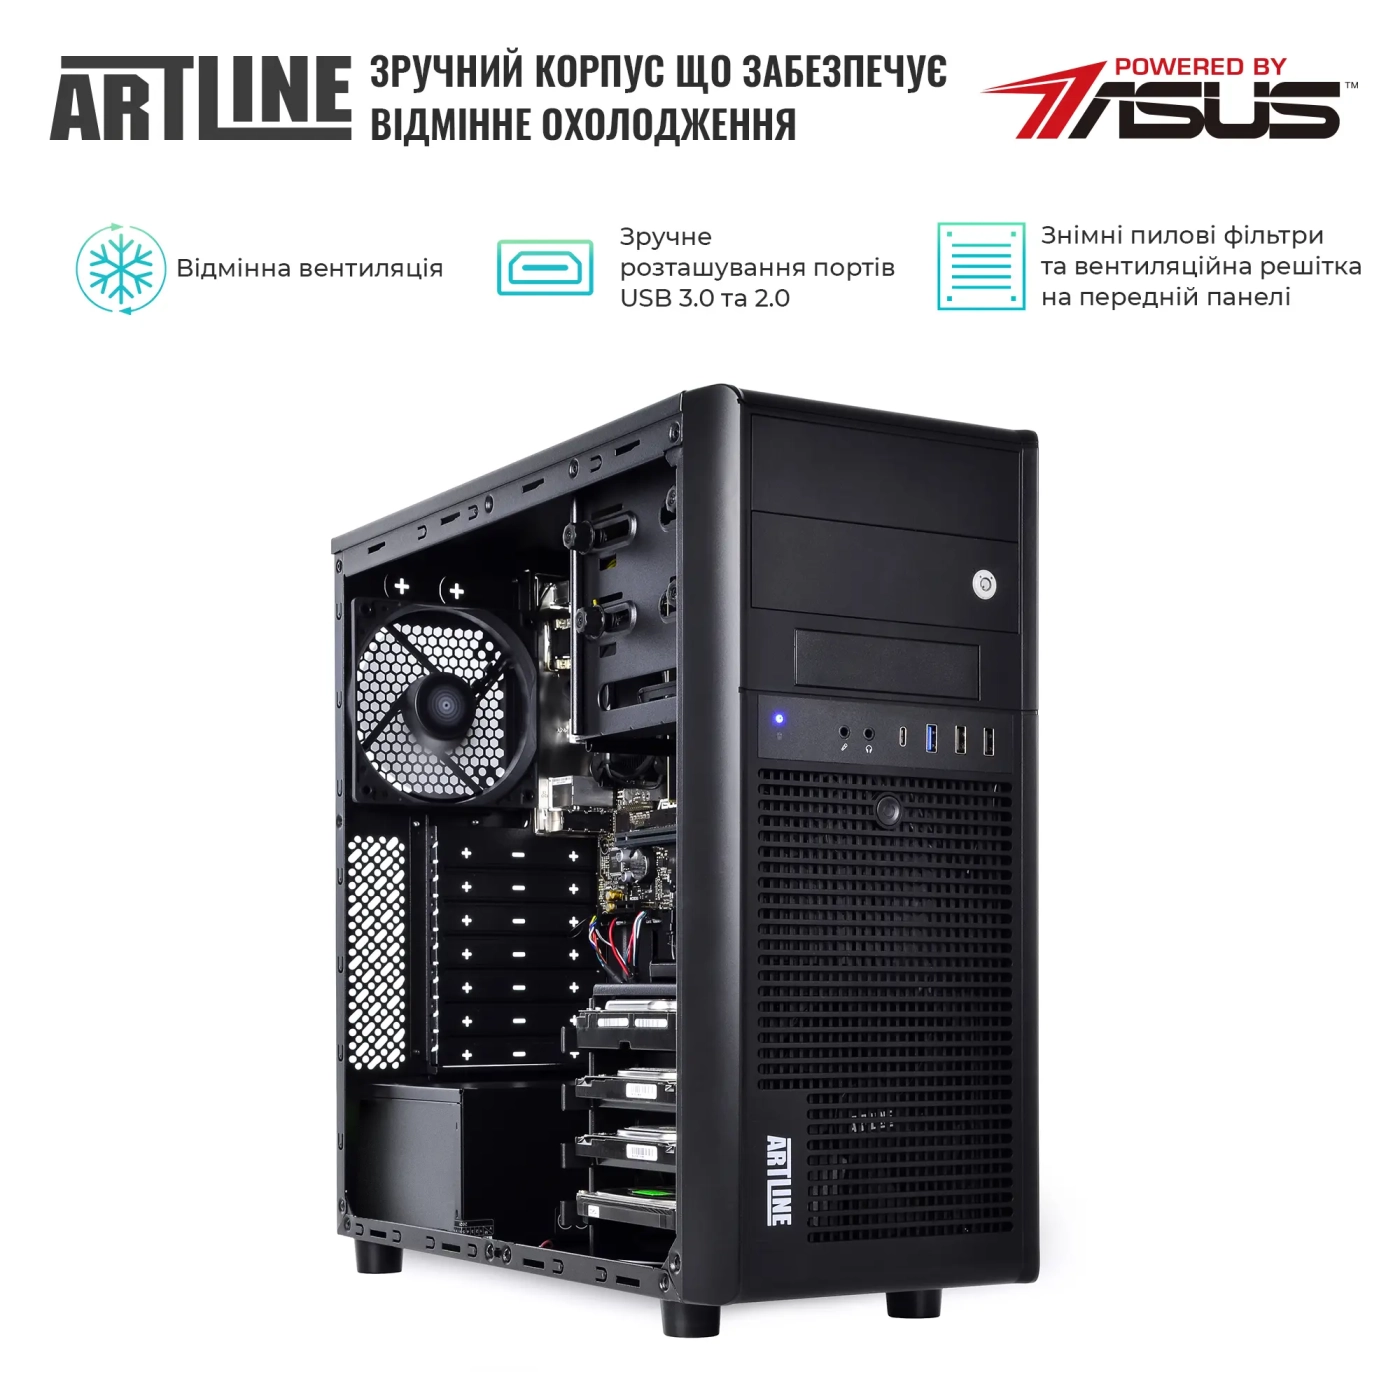 Купити Сервер ARTLINE Business T37 (T37v33) - фото 3